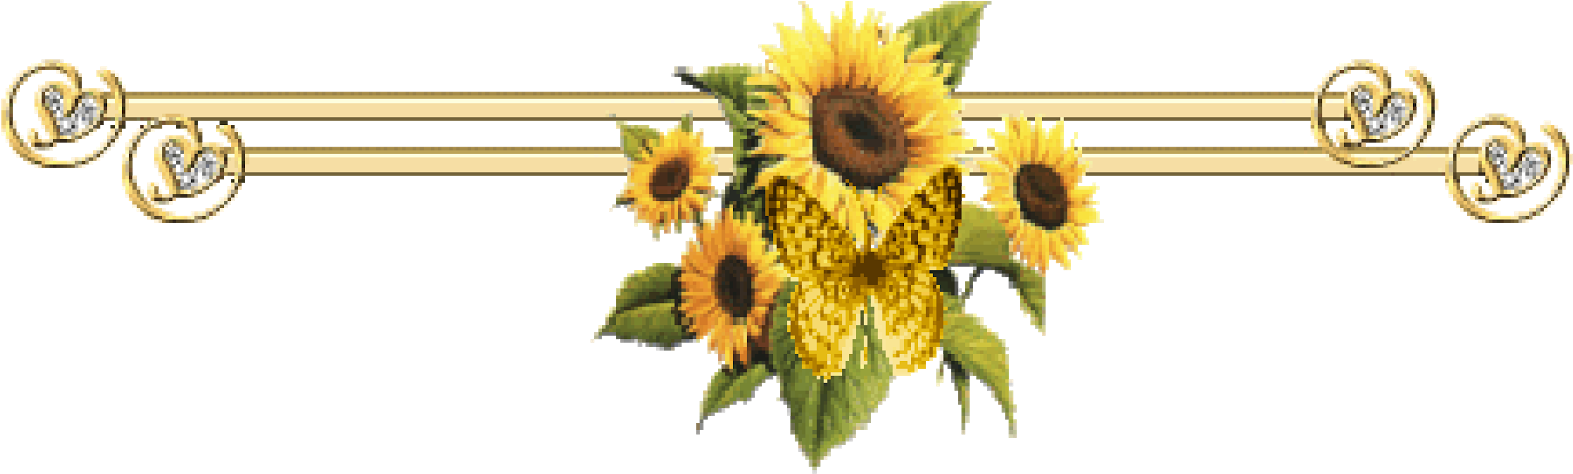 Ho Oponopono Por Elizabeth Orozco - Border Terrier Sunflower And Butterflies Mousepad (1600x484)